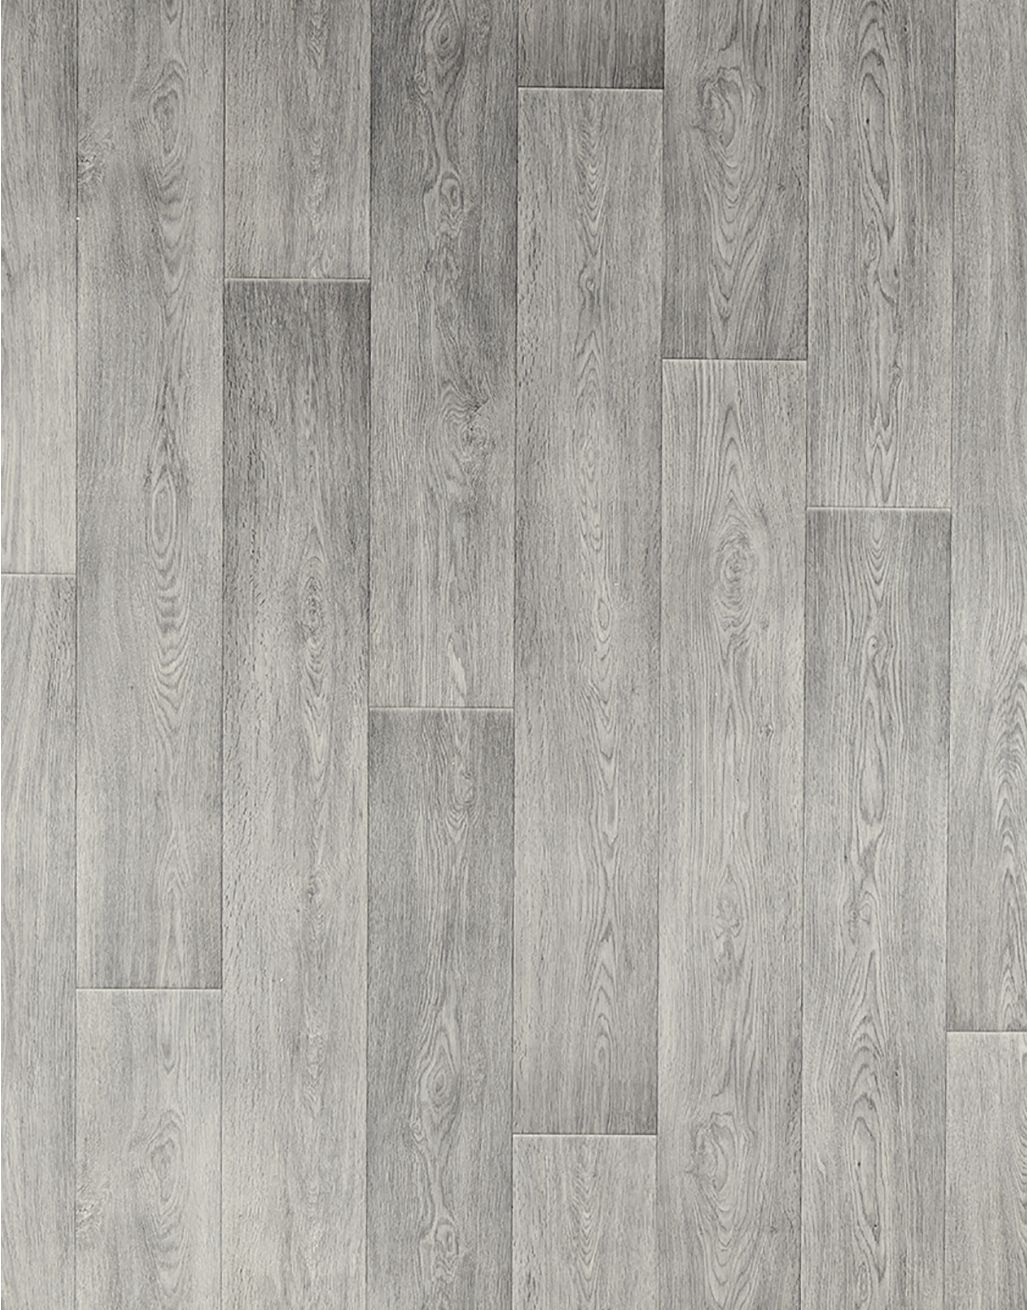 Real Woods Silk Grey Oak Flooring, Grey Oak Vinyl Plank Flooring